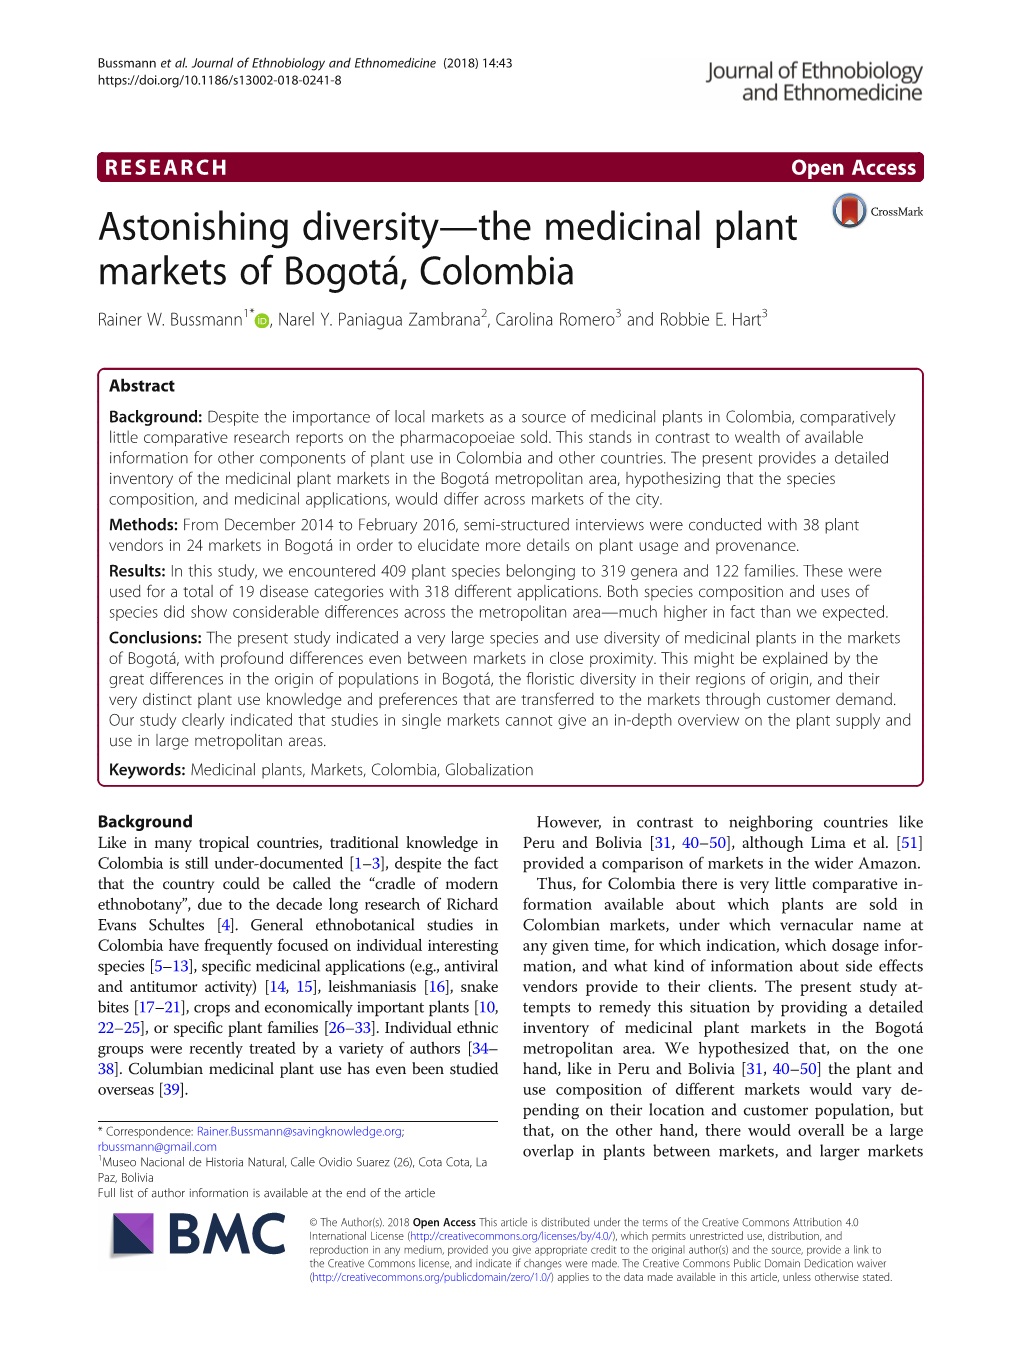 Astonishing Diversity—The Medicinal Plant Markets of Bogotá, Colombia Rainer W